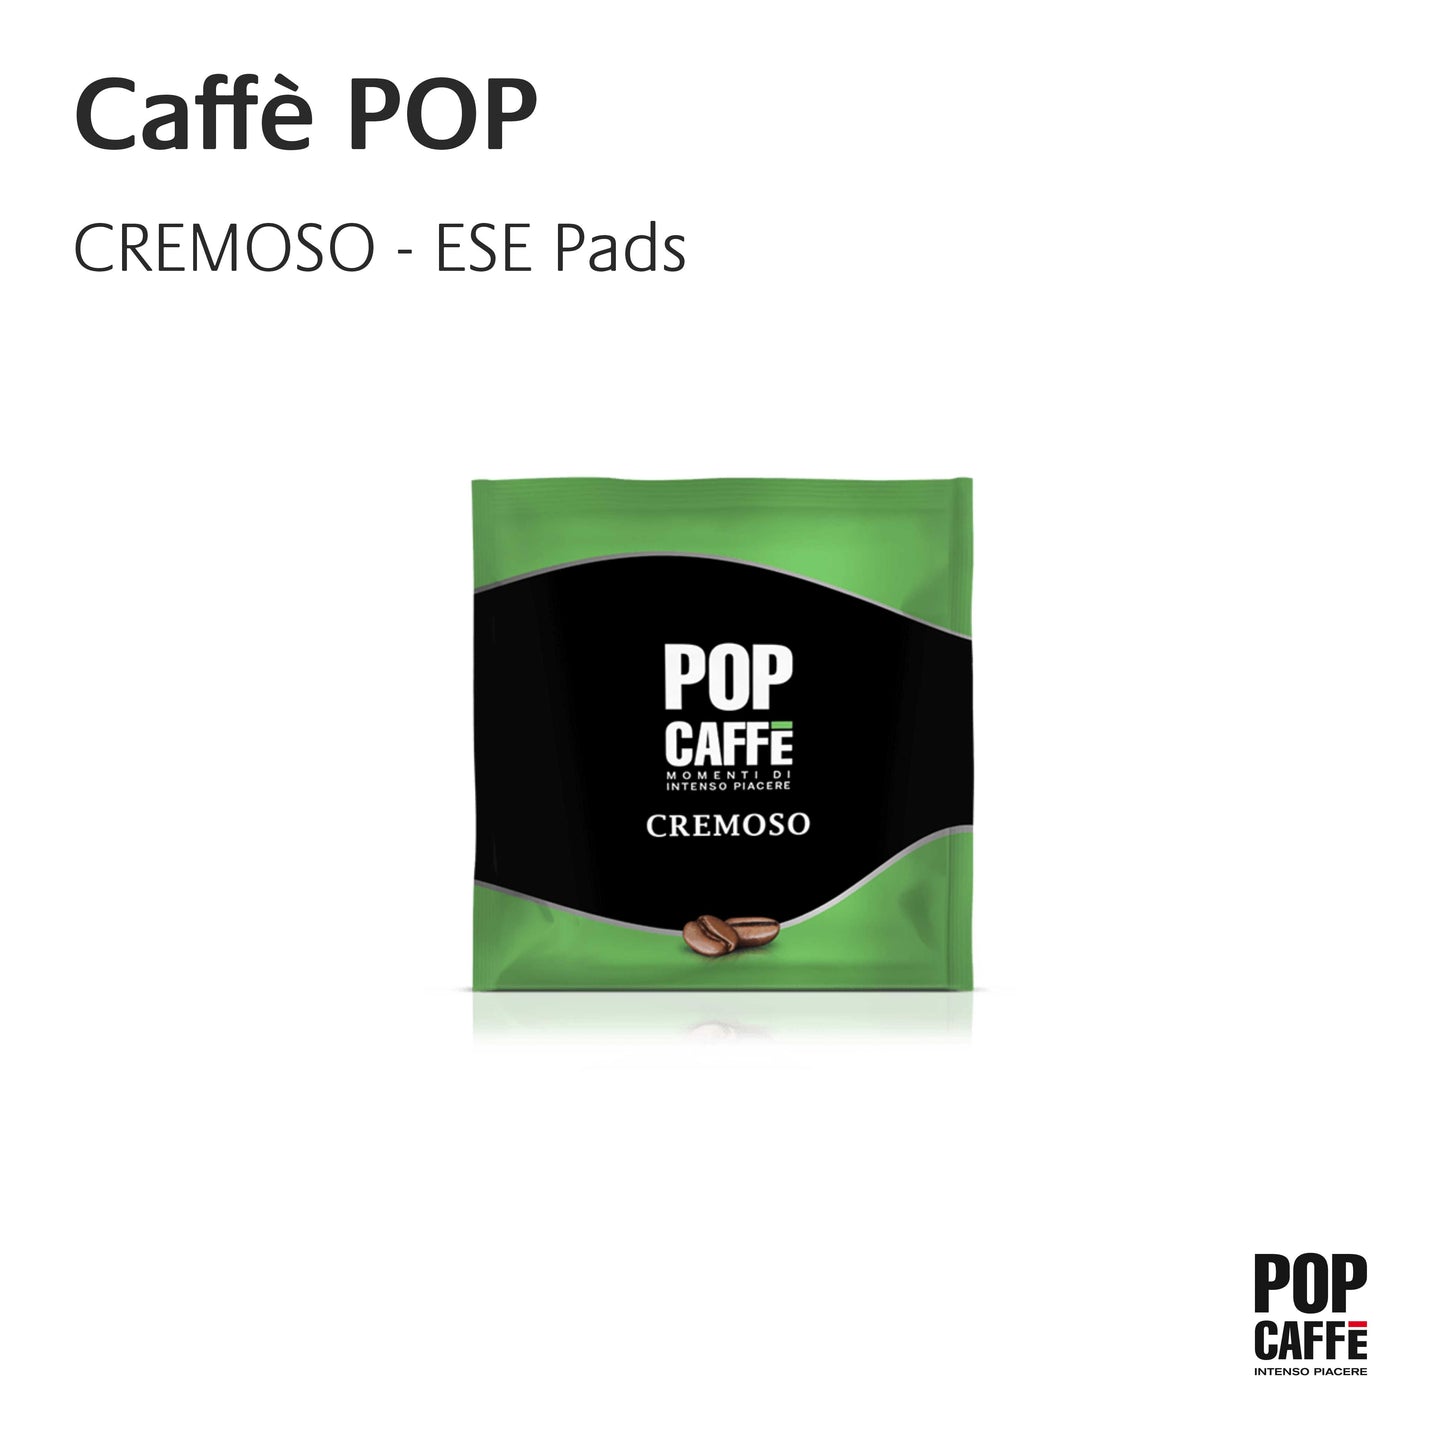 Caffè POP CREMOSO